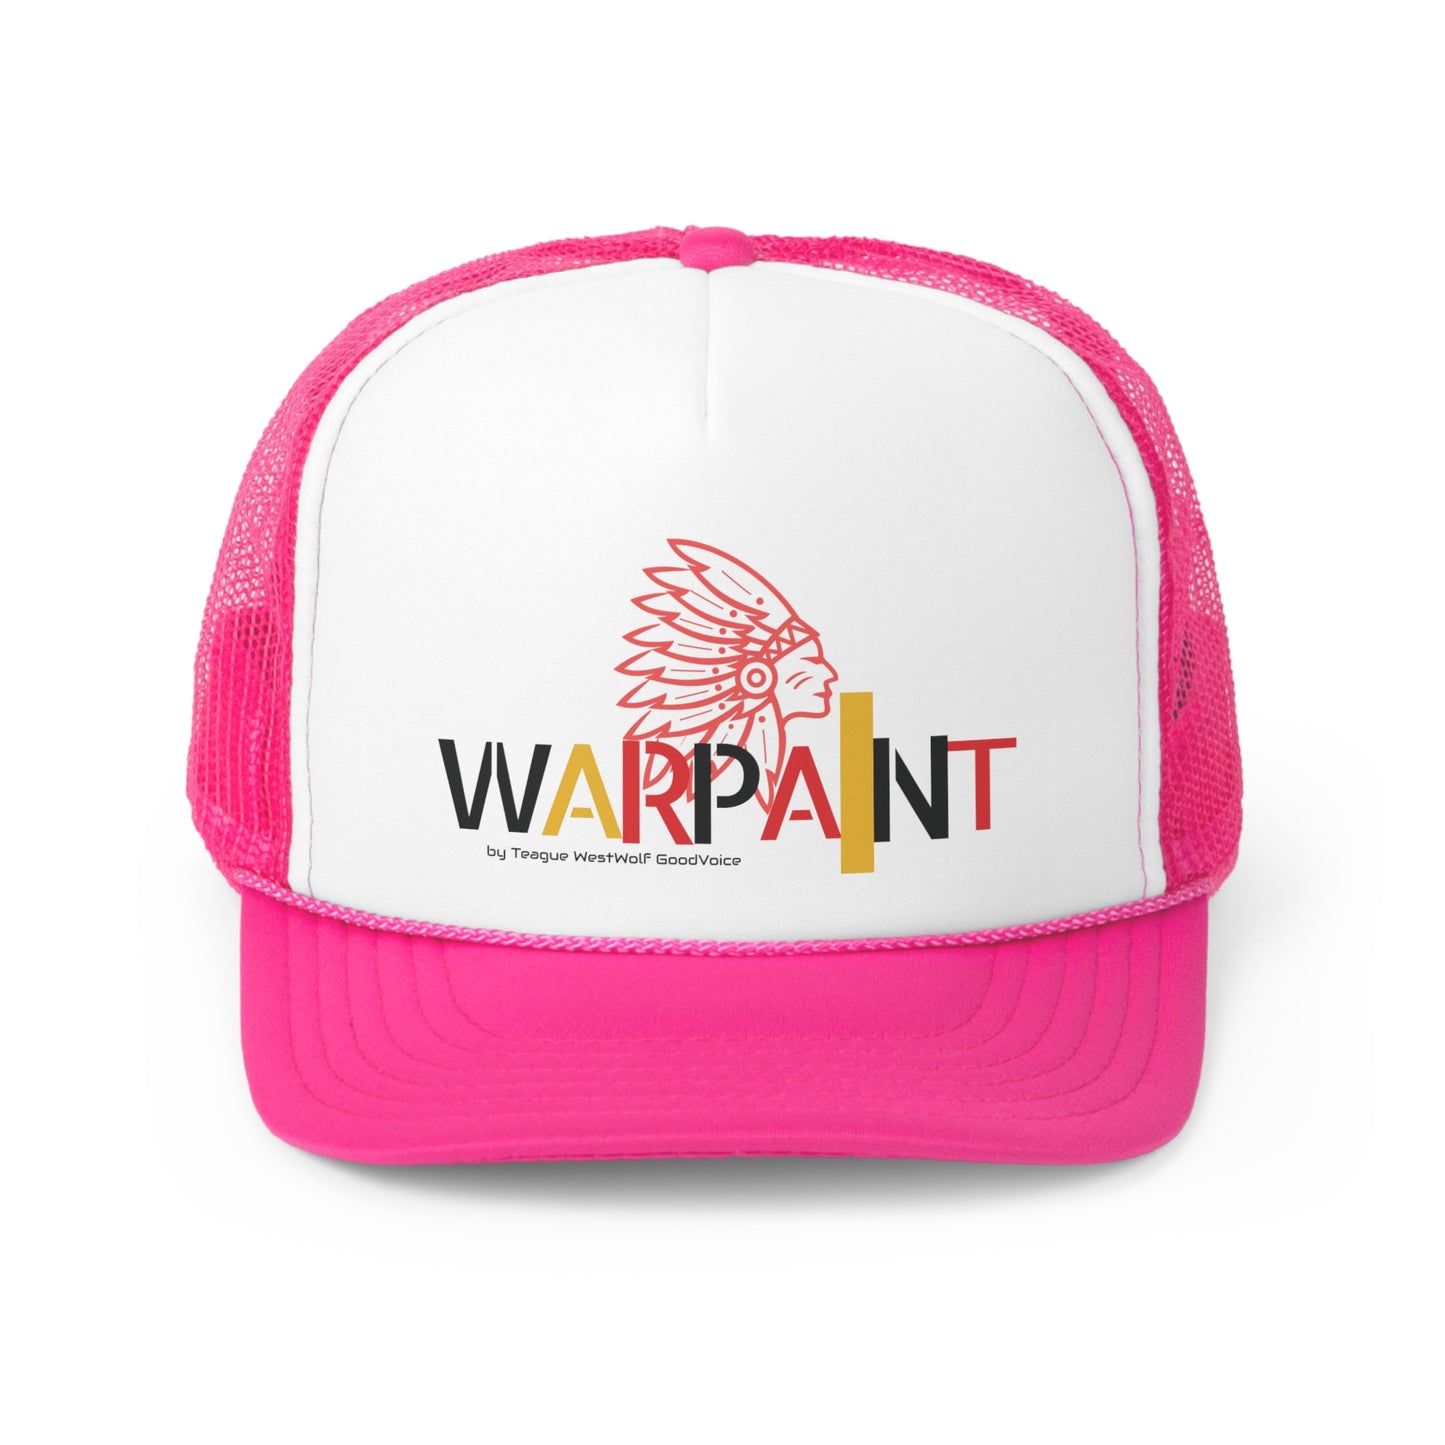 Wear Your WarPaint - Trucker Caps by Teague WestWolf GoodVoice